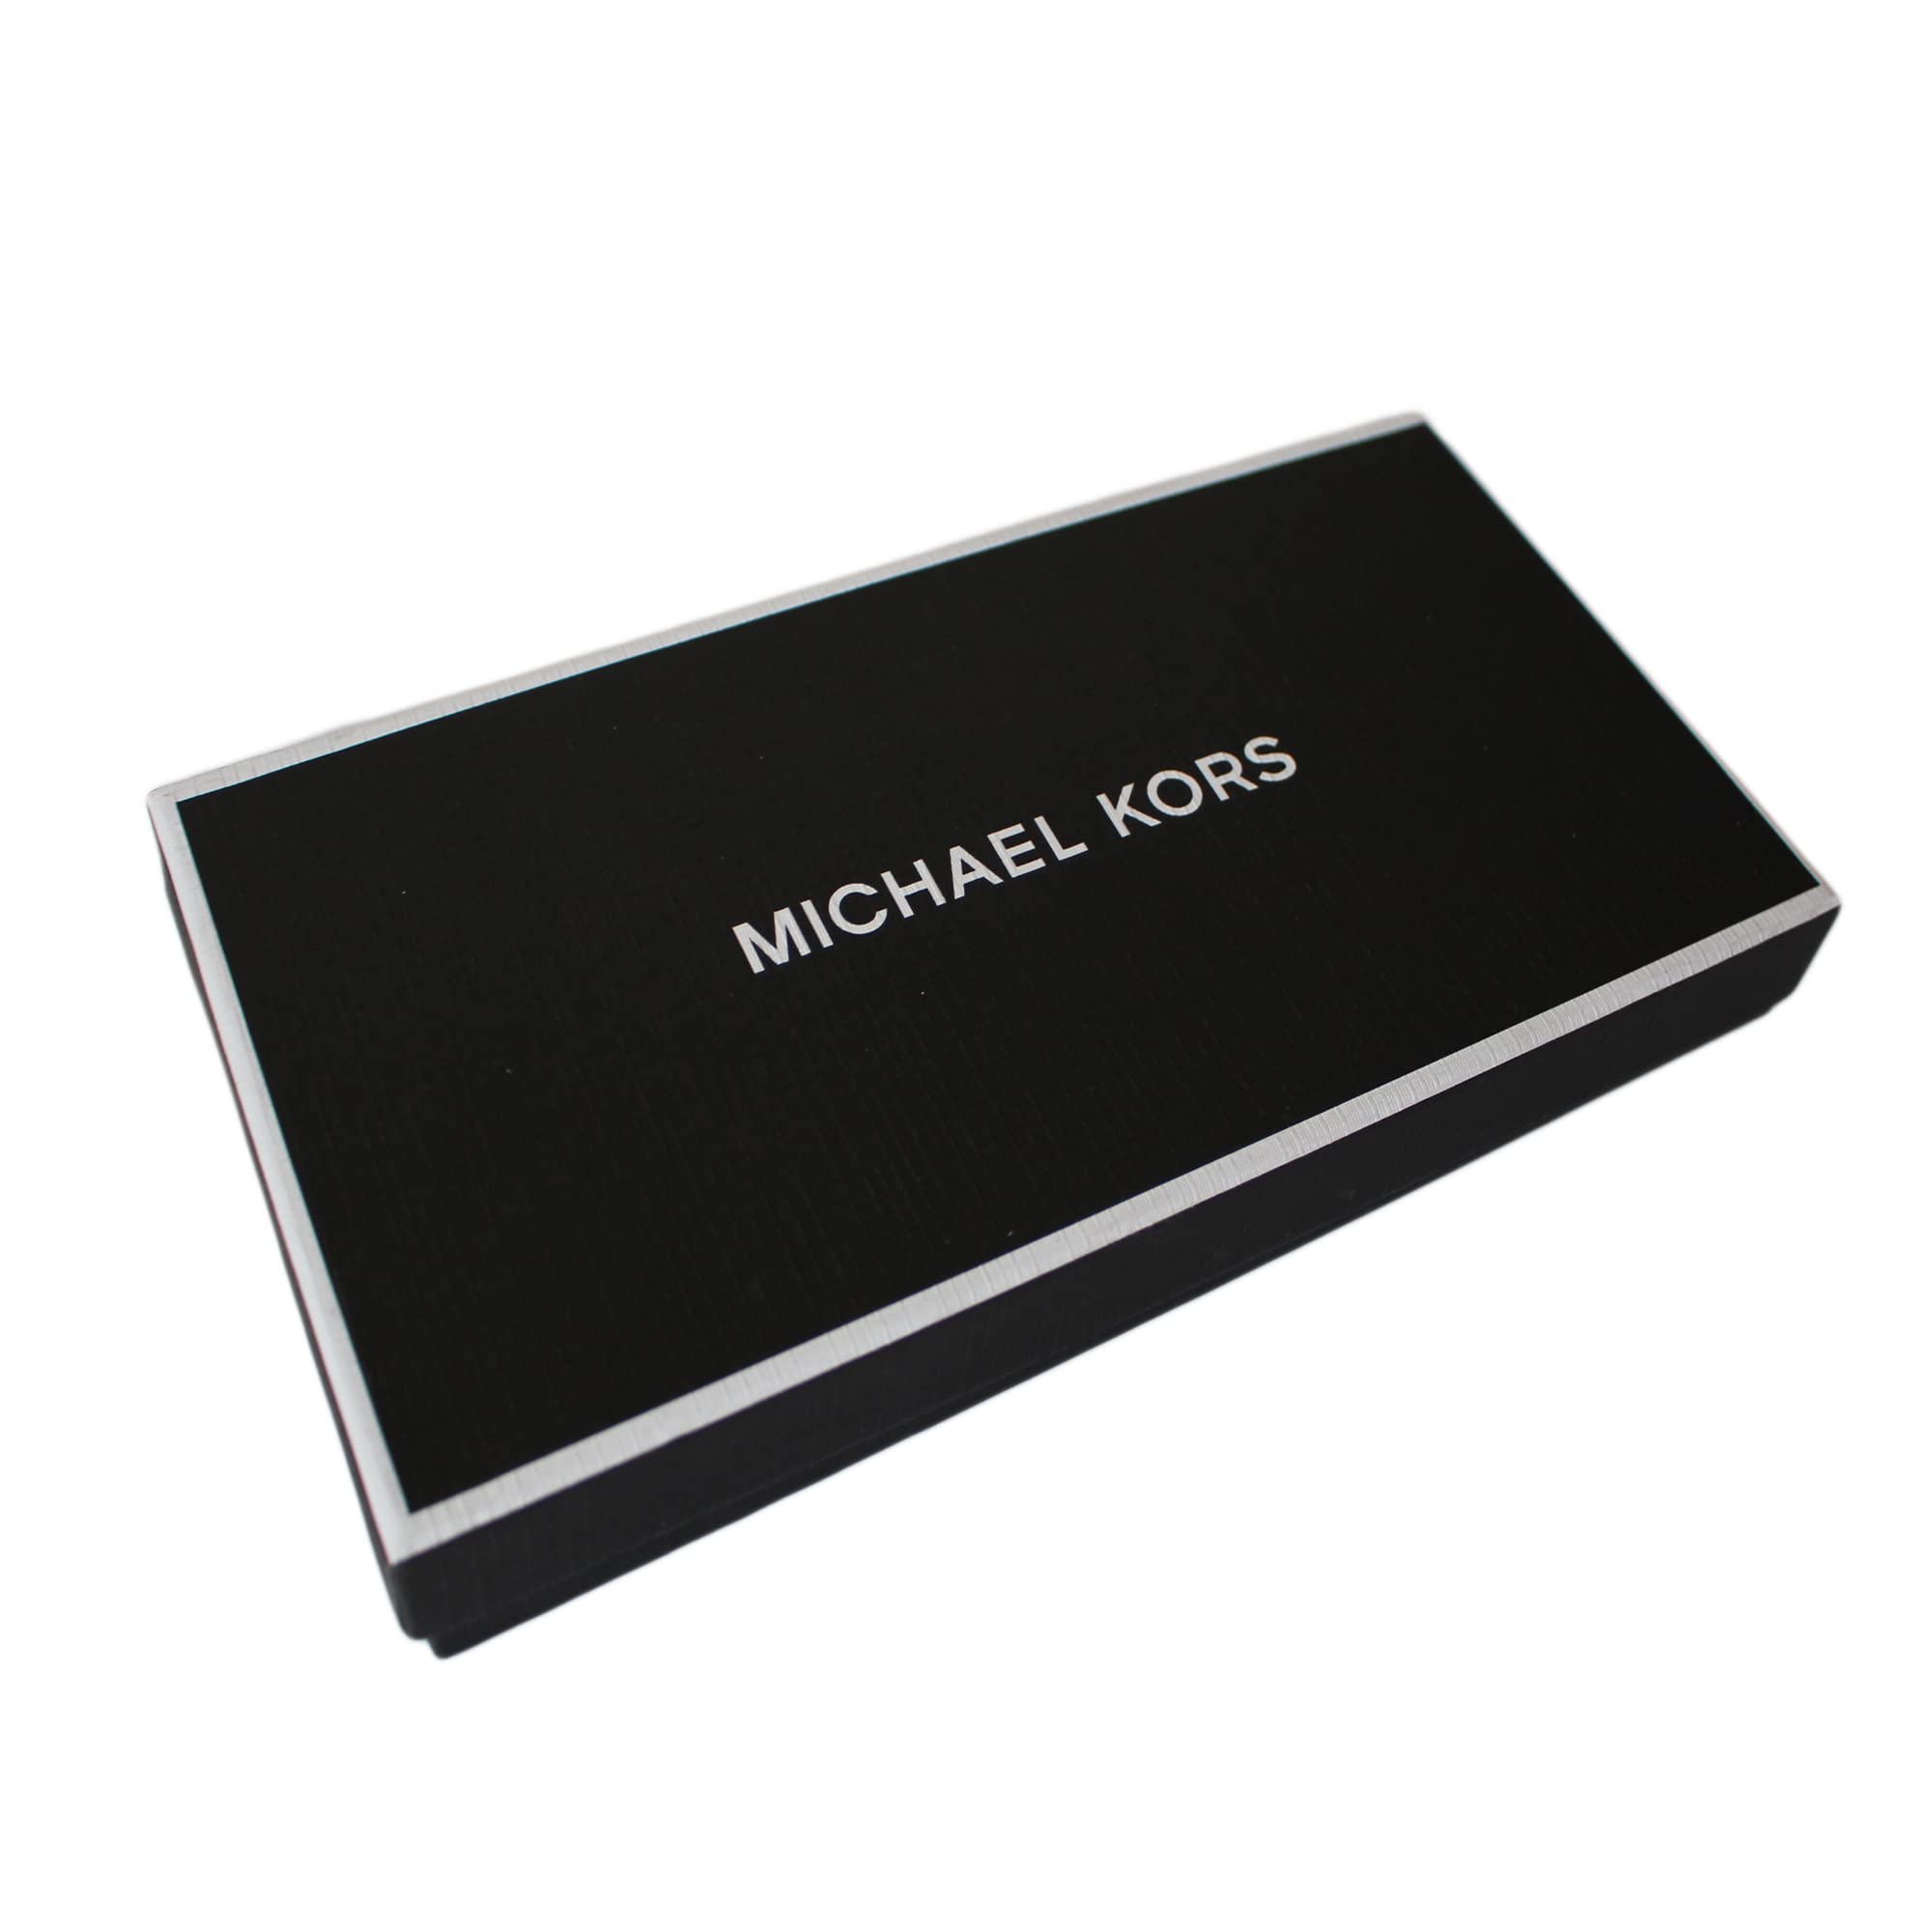 Michael Kors Luxury Original Watch Box